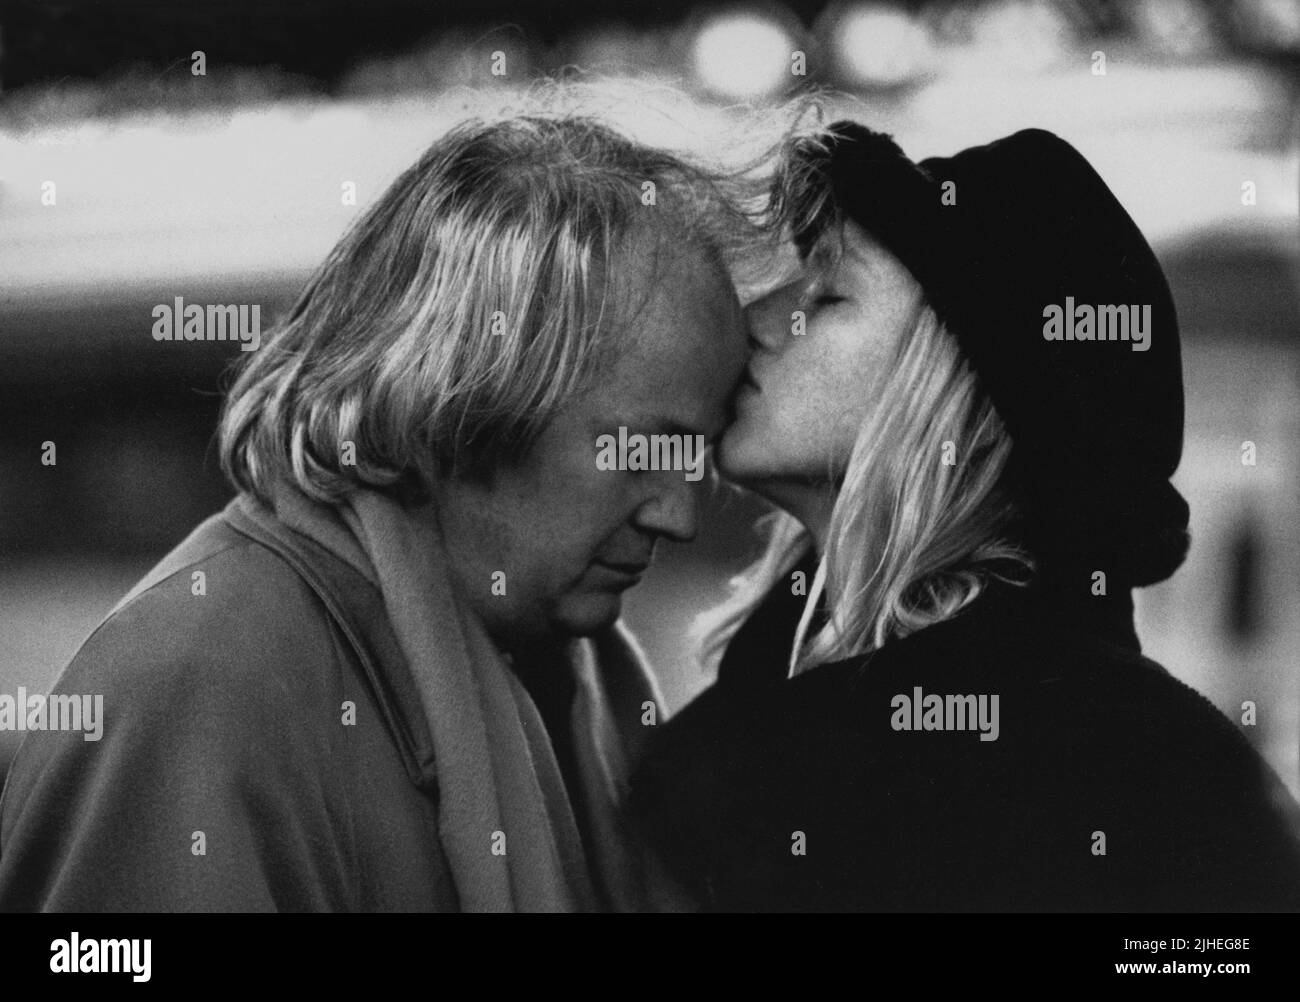 La naissance de l'amour Year : 1993 France / Switzerland Director : Philippe Garrel Lou Castel, Johanna ter Steege Stock Photo